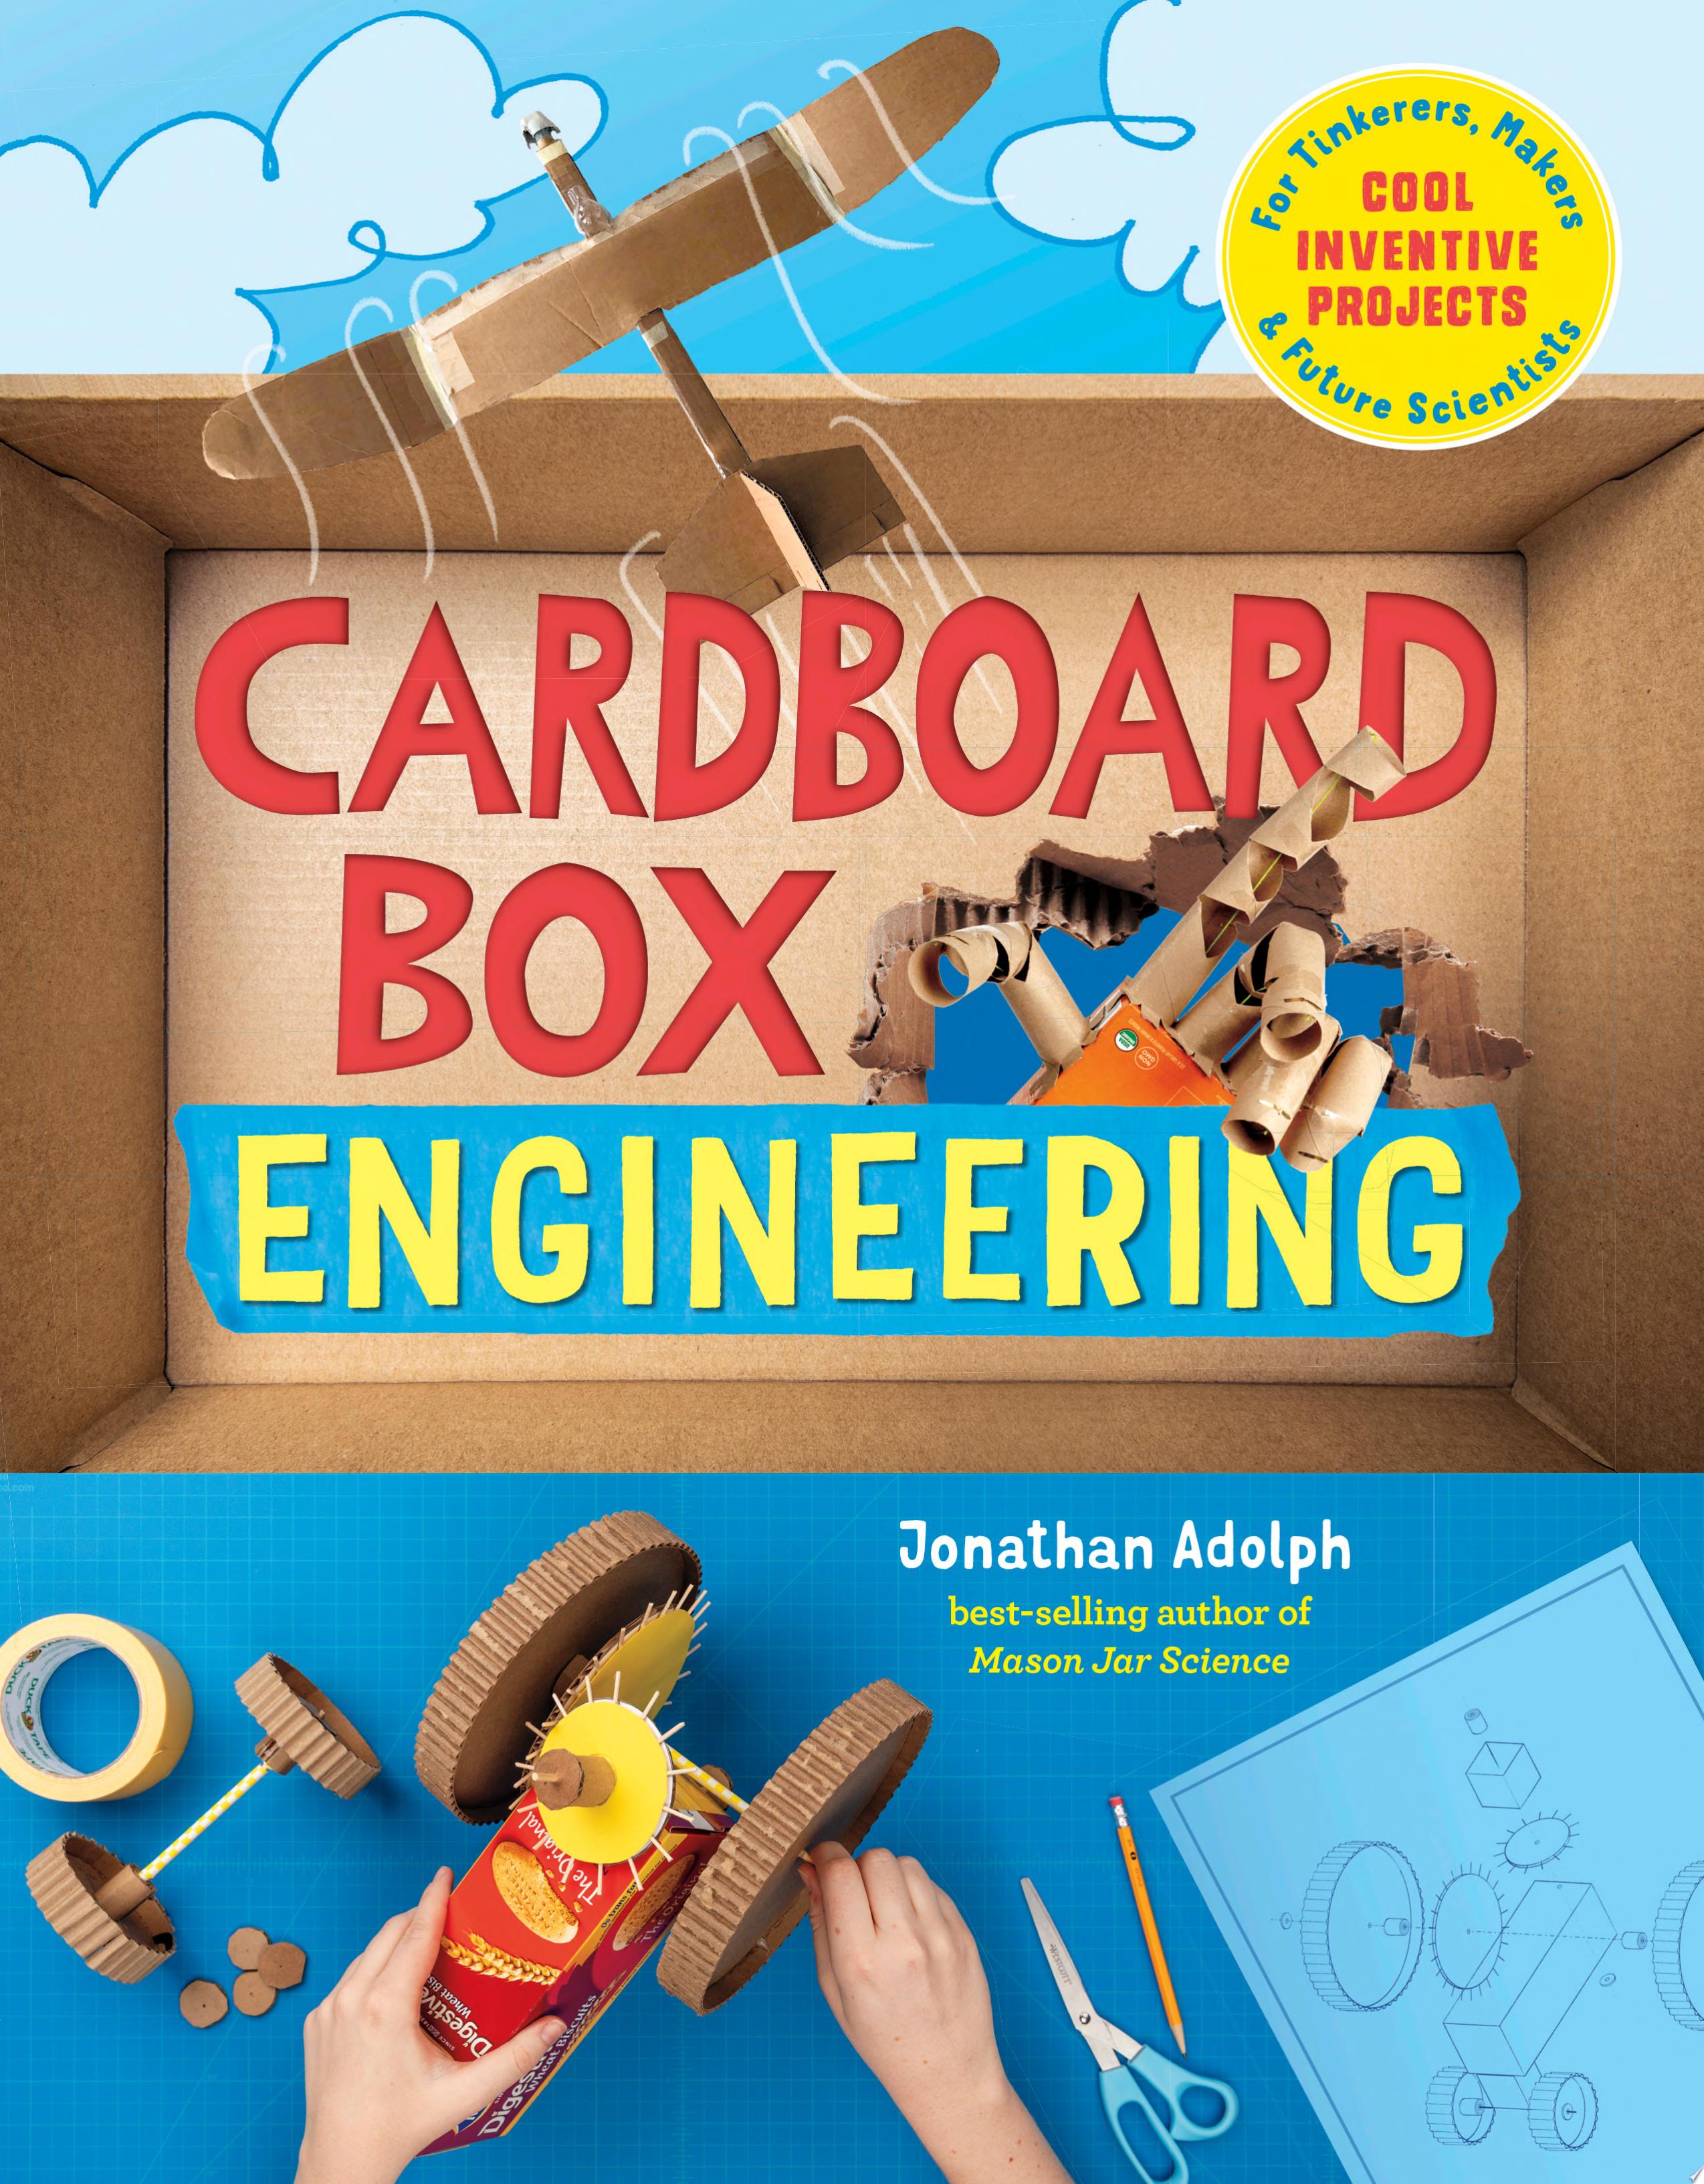 Image for "Cardboard Box Engineering"